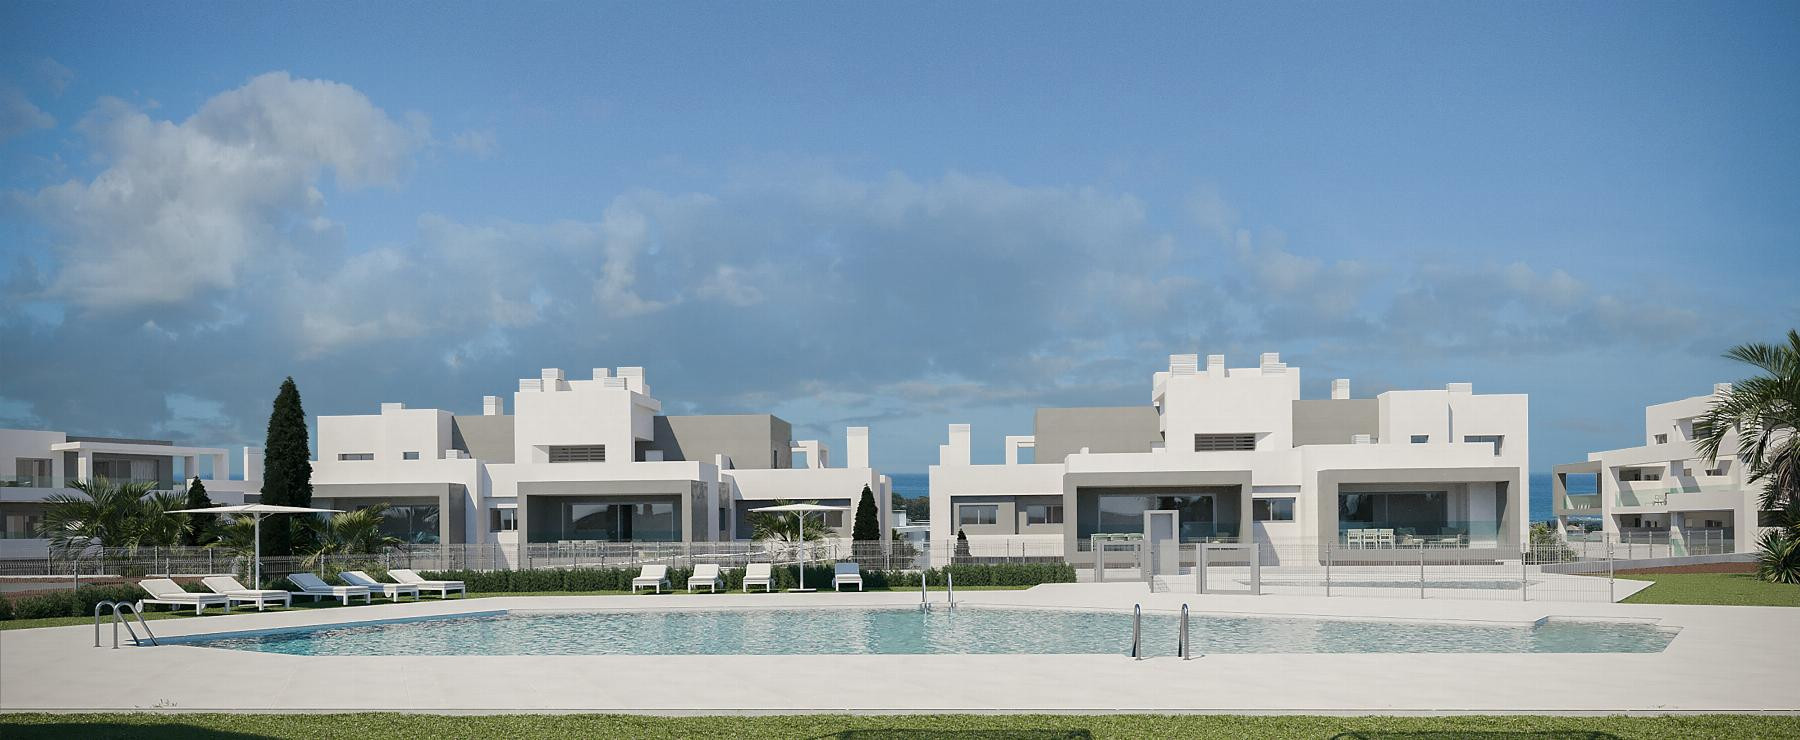 Vanian Gardens III: Exclusive homes from 1 to 4 bedrooms located in Estepona. | Image 1